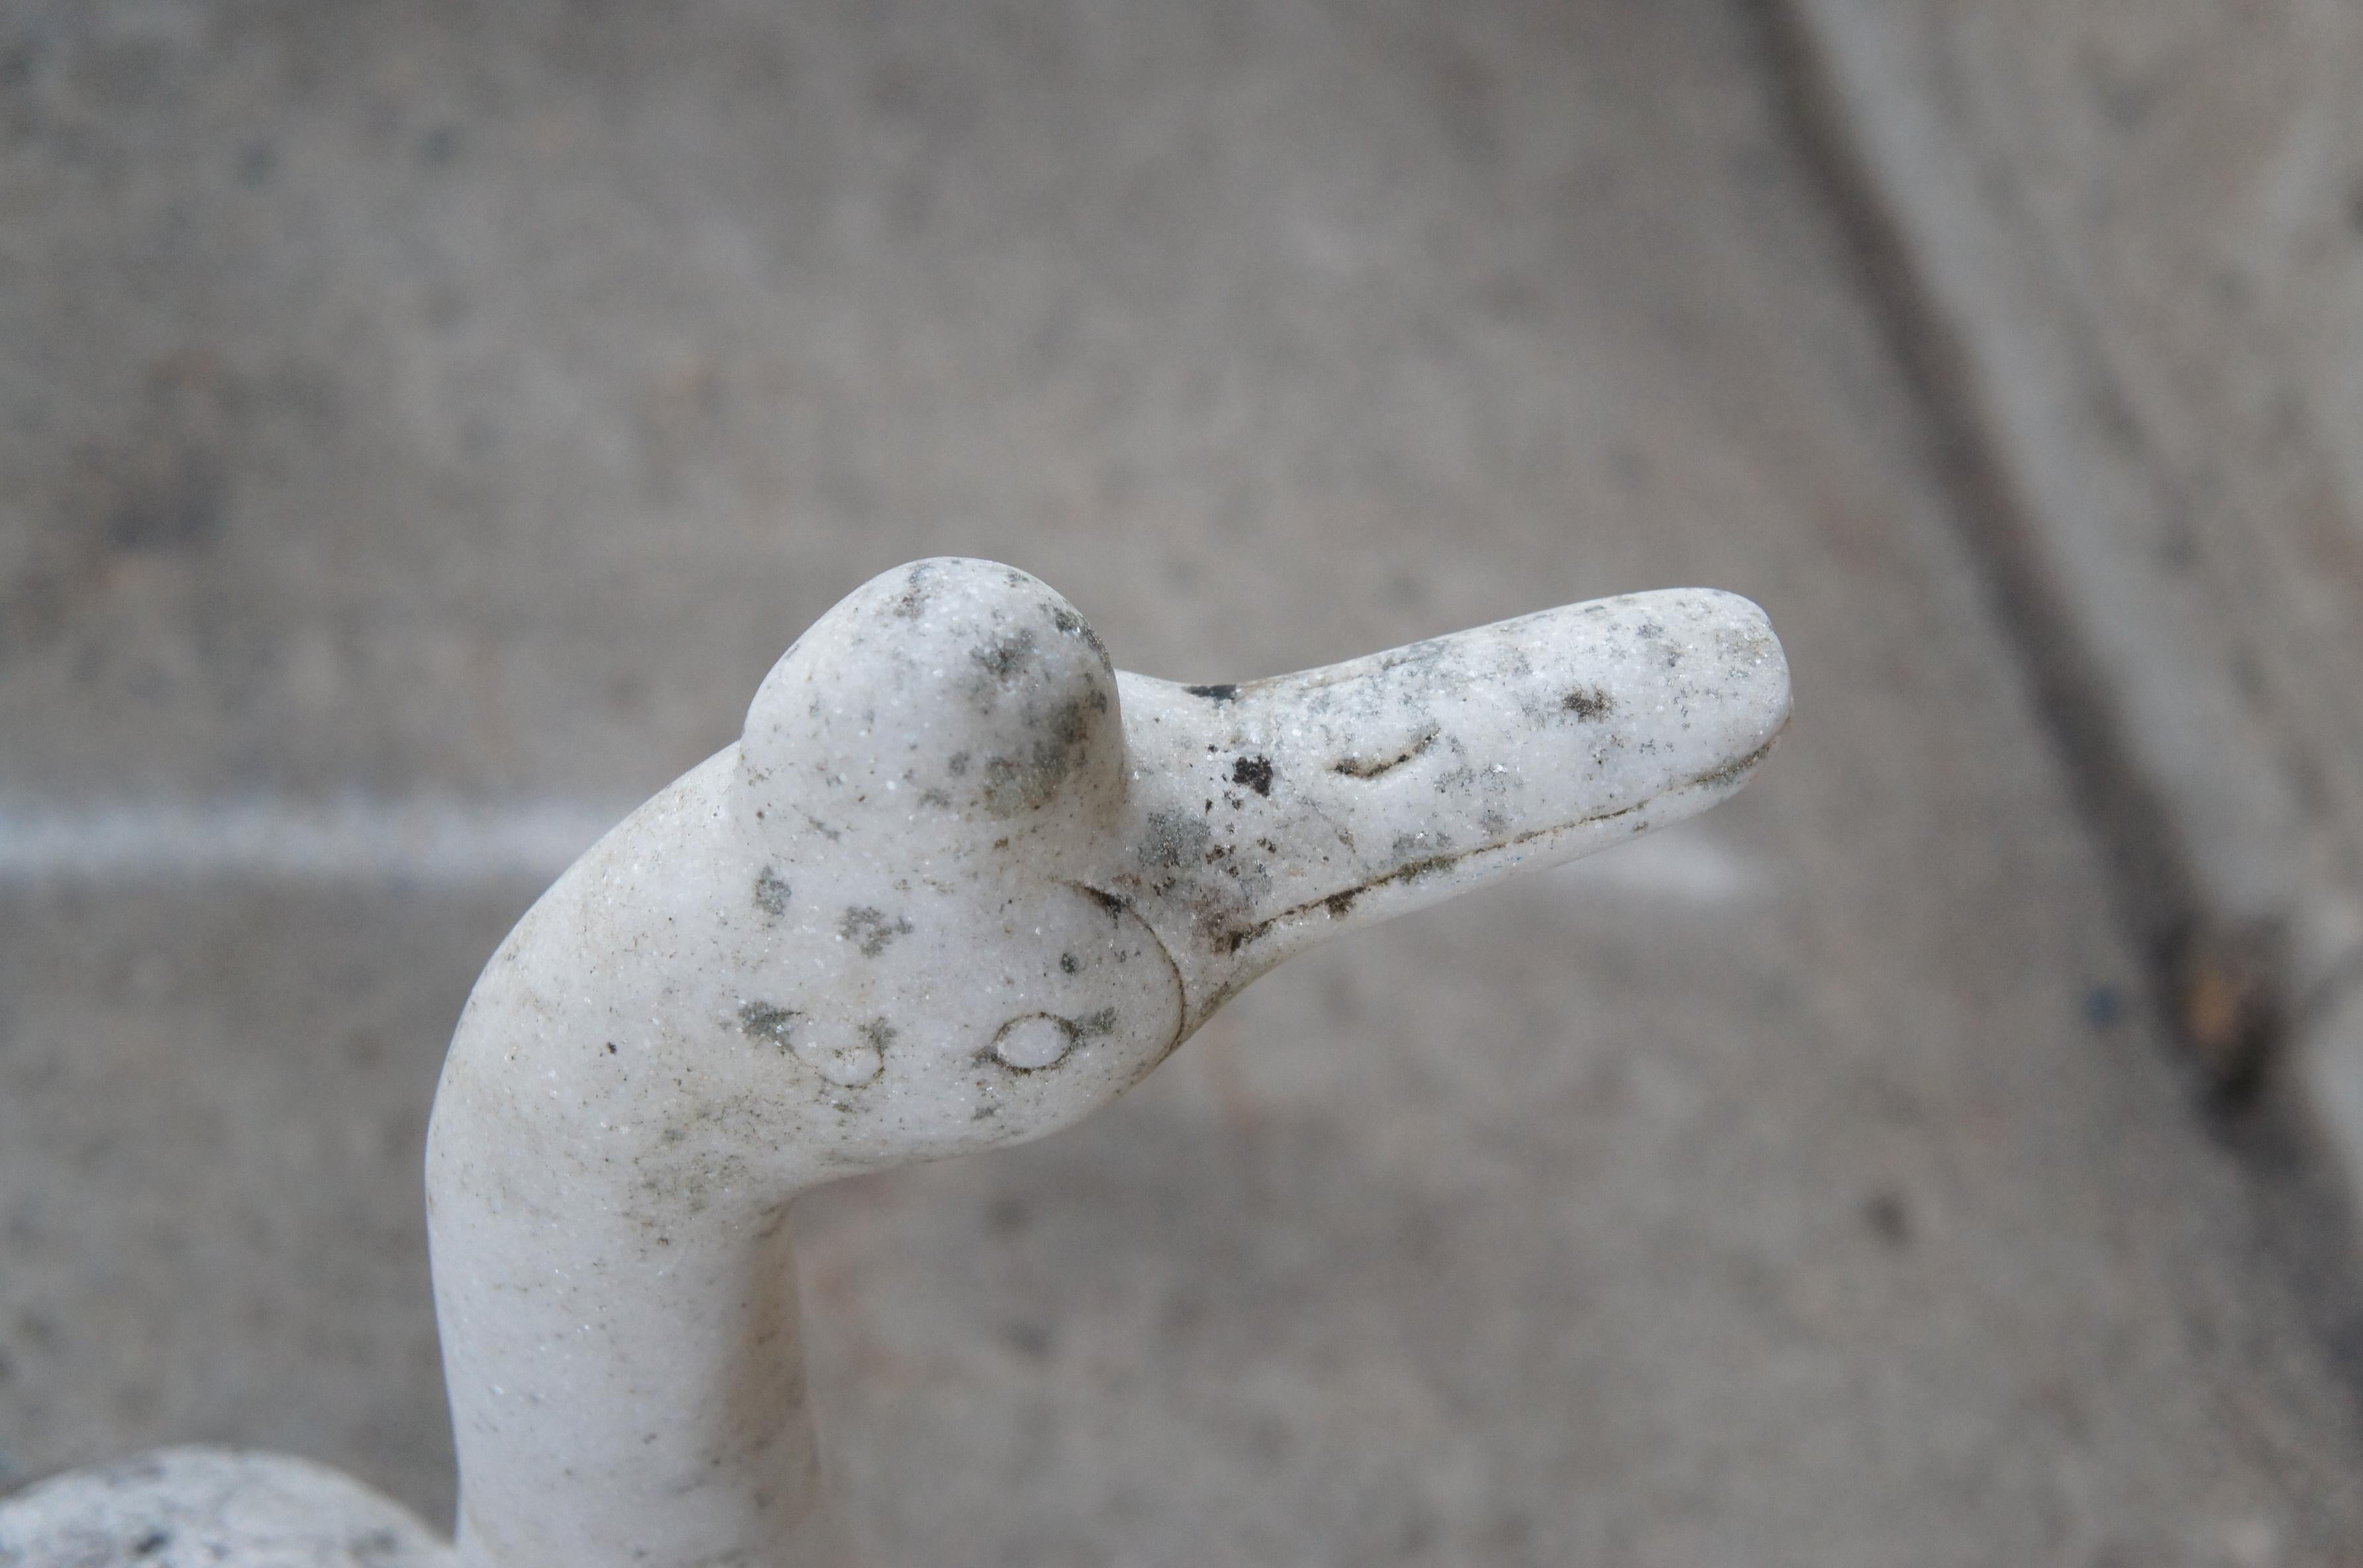 Antiquities Italian Carved Marble Stone Goose Geese Bird Garden Sculpture Statue 24